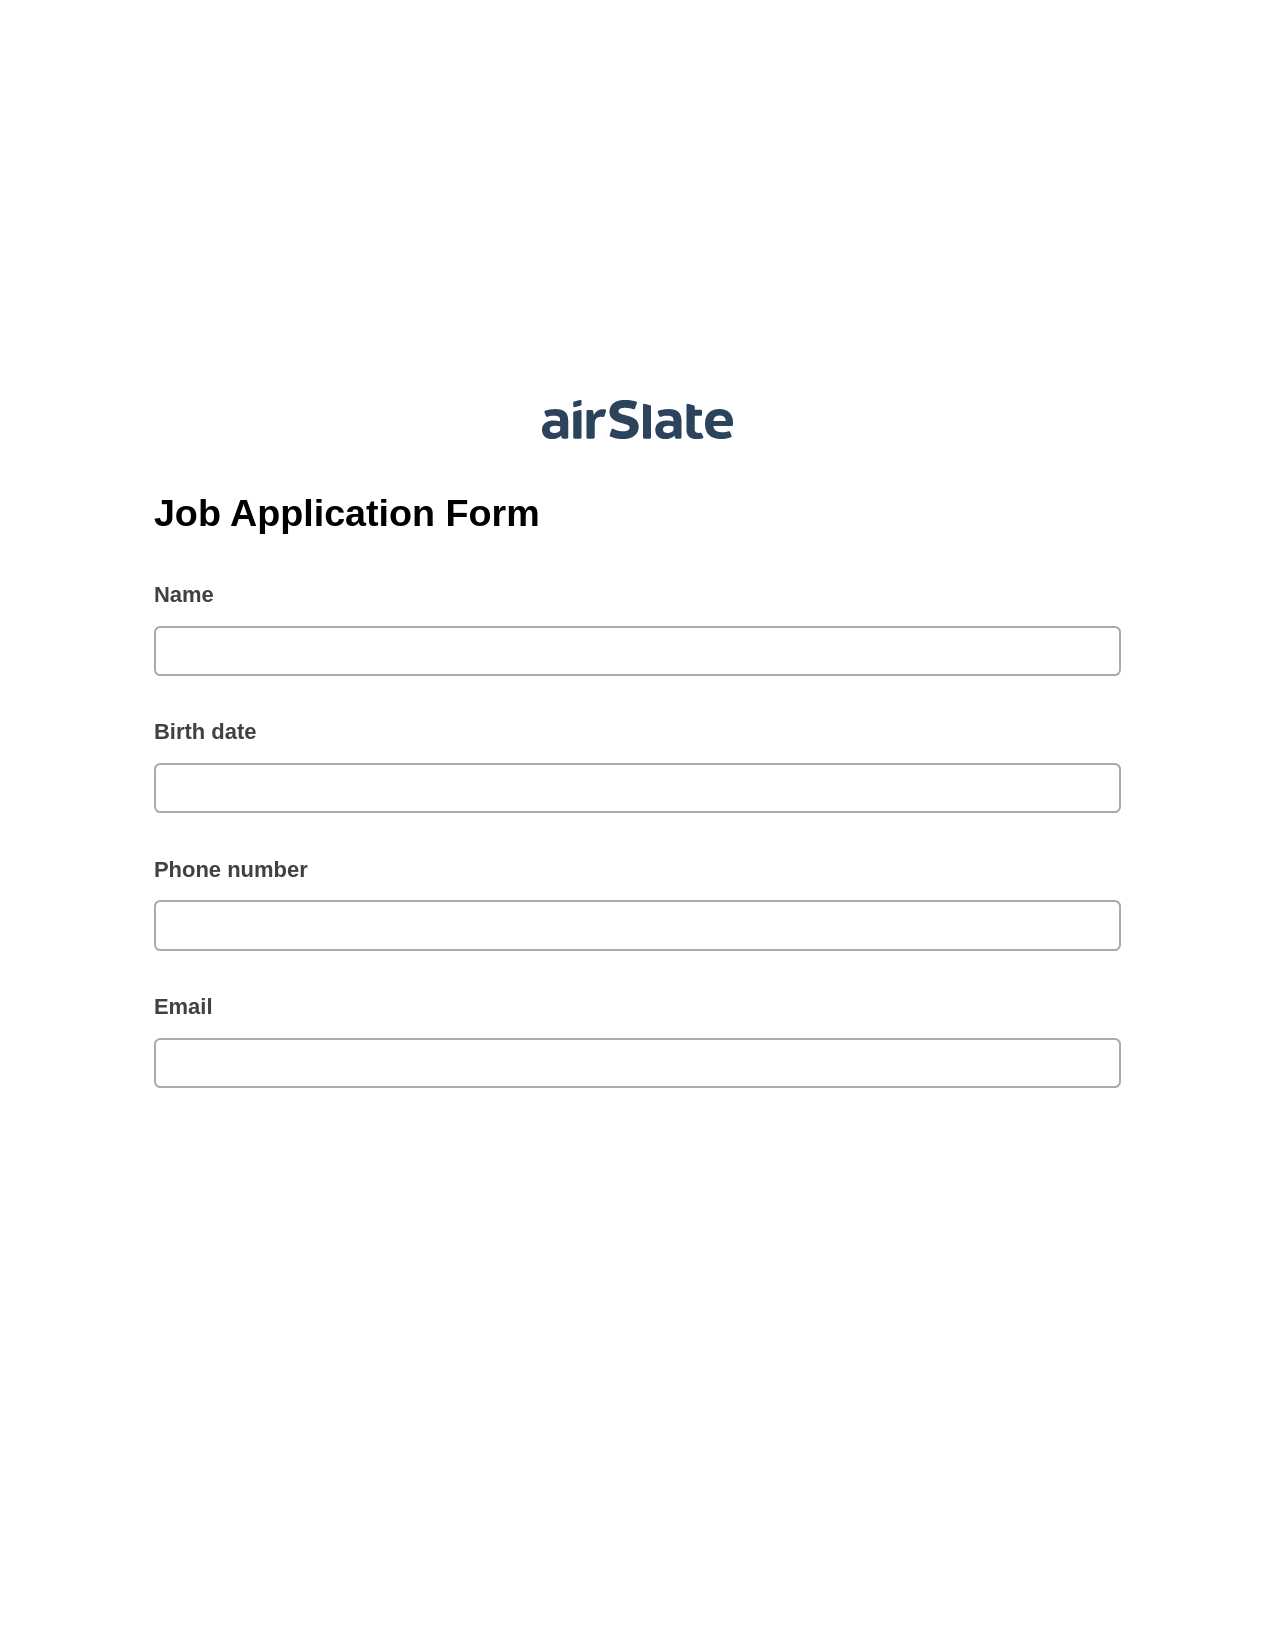 Multirole Job Application Form Pre-fill from MySQL Bot, Update NetSuite Records Bot, Google Drive Bot